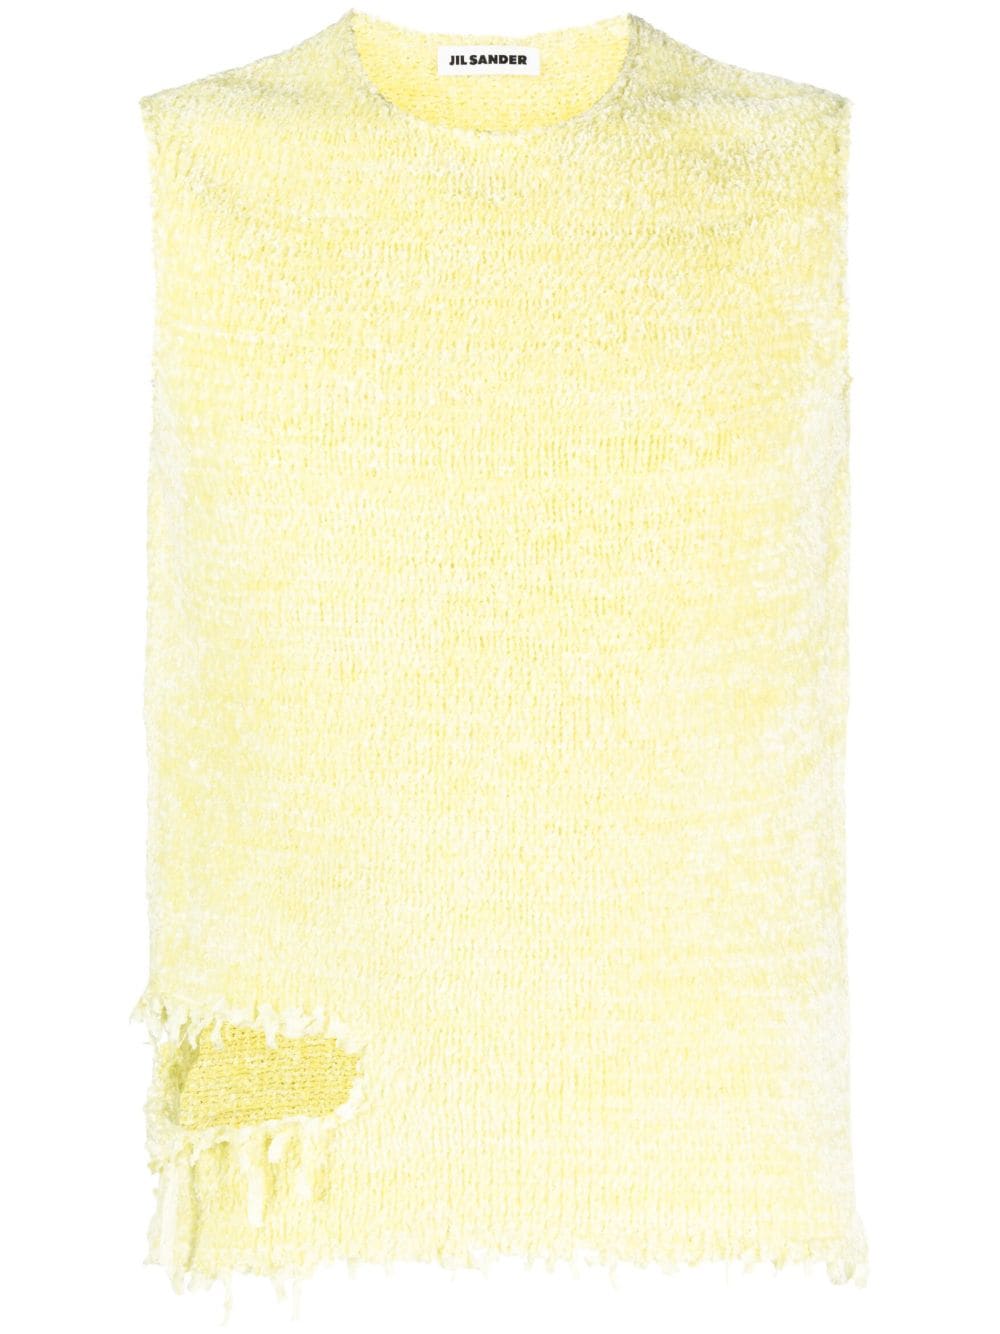 Jil Sander distressed-finish knitted top - Yellow von Jil Sander